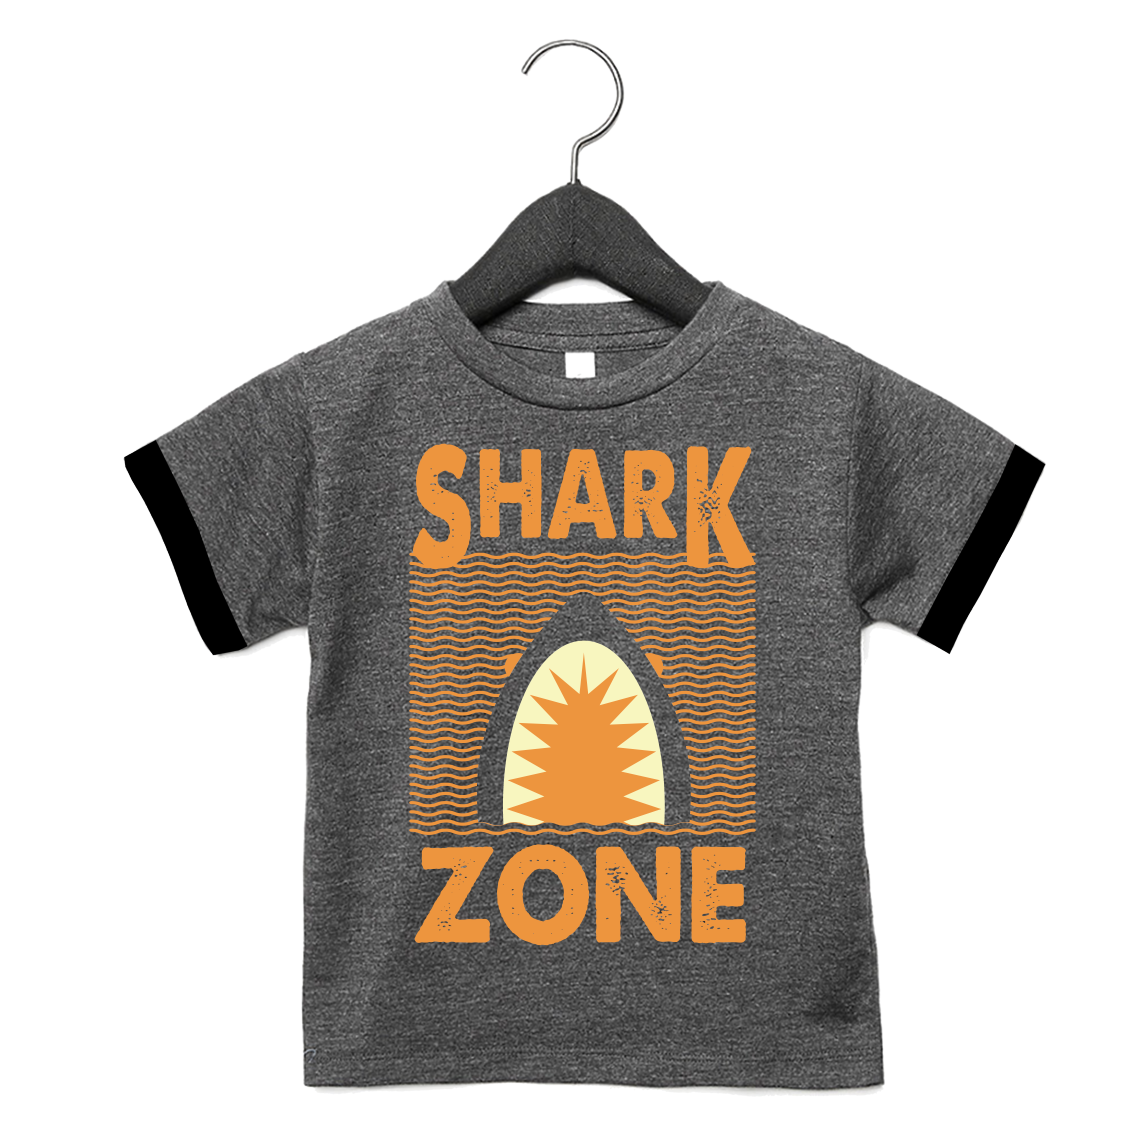 Shark Zone Grey Tee - Unisex for Boys and Girls